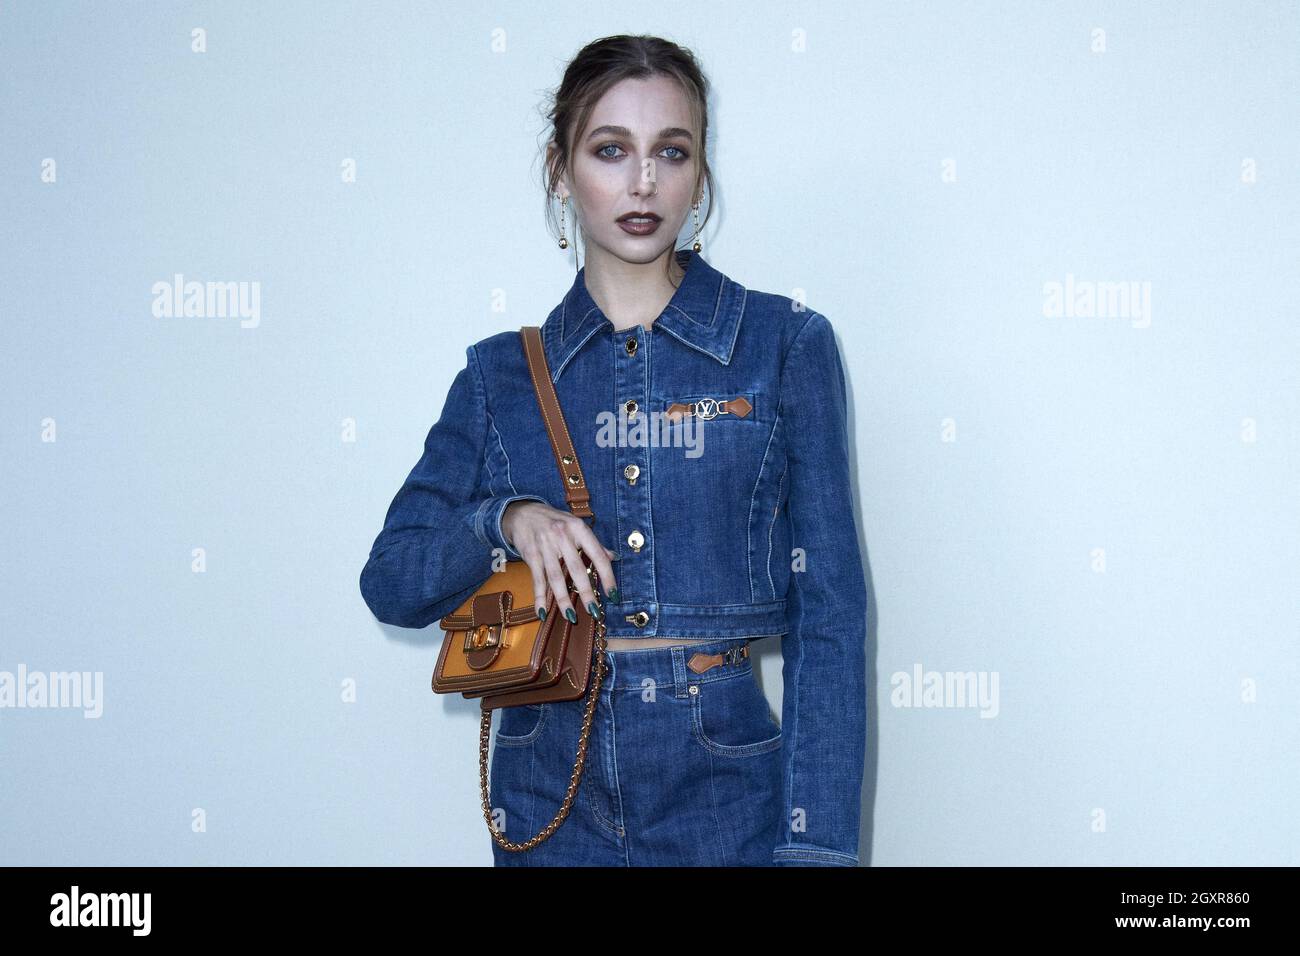 Emma Chamberlain Shares Louis Vuitton Paris Fashion Week Photos – WWD